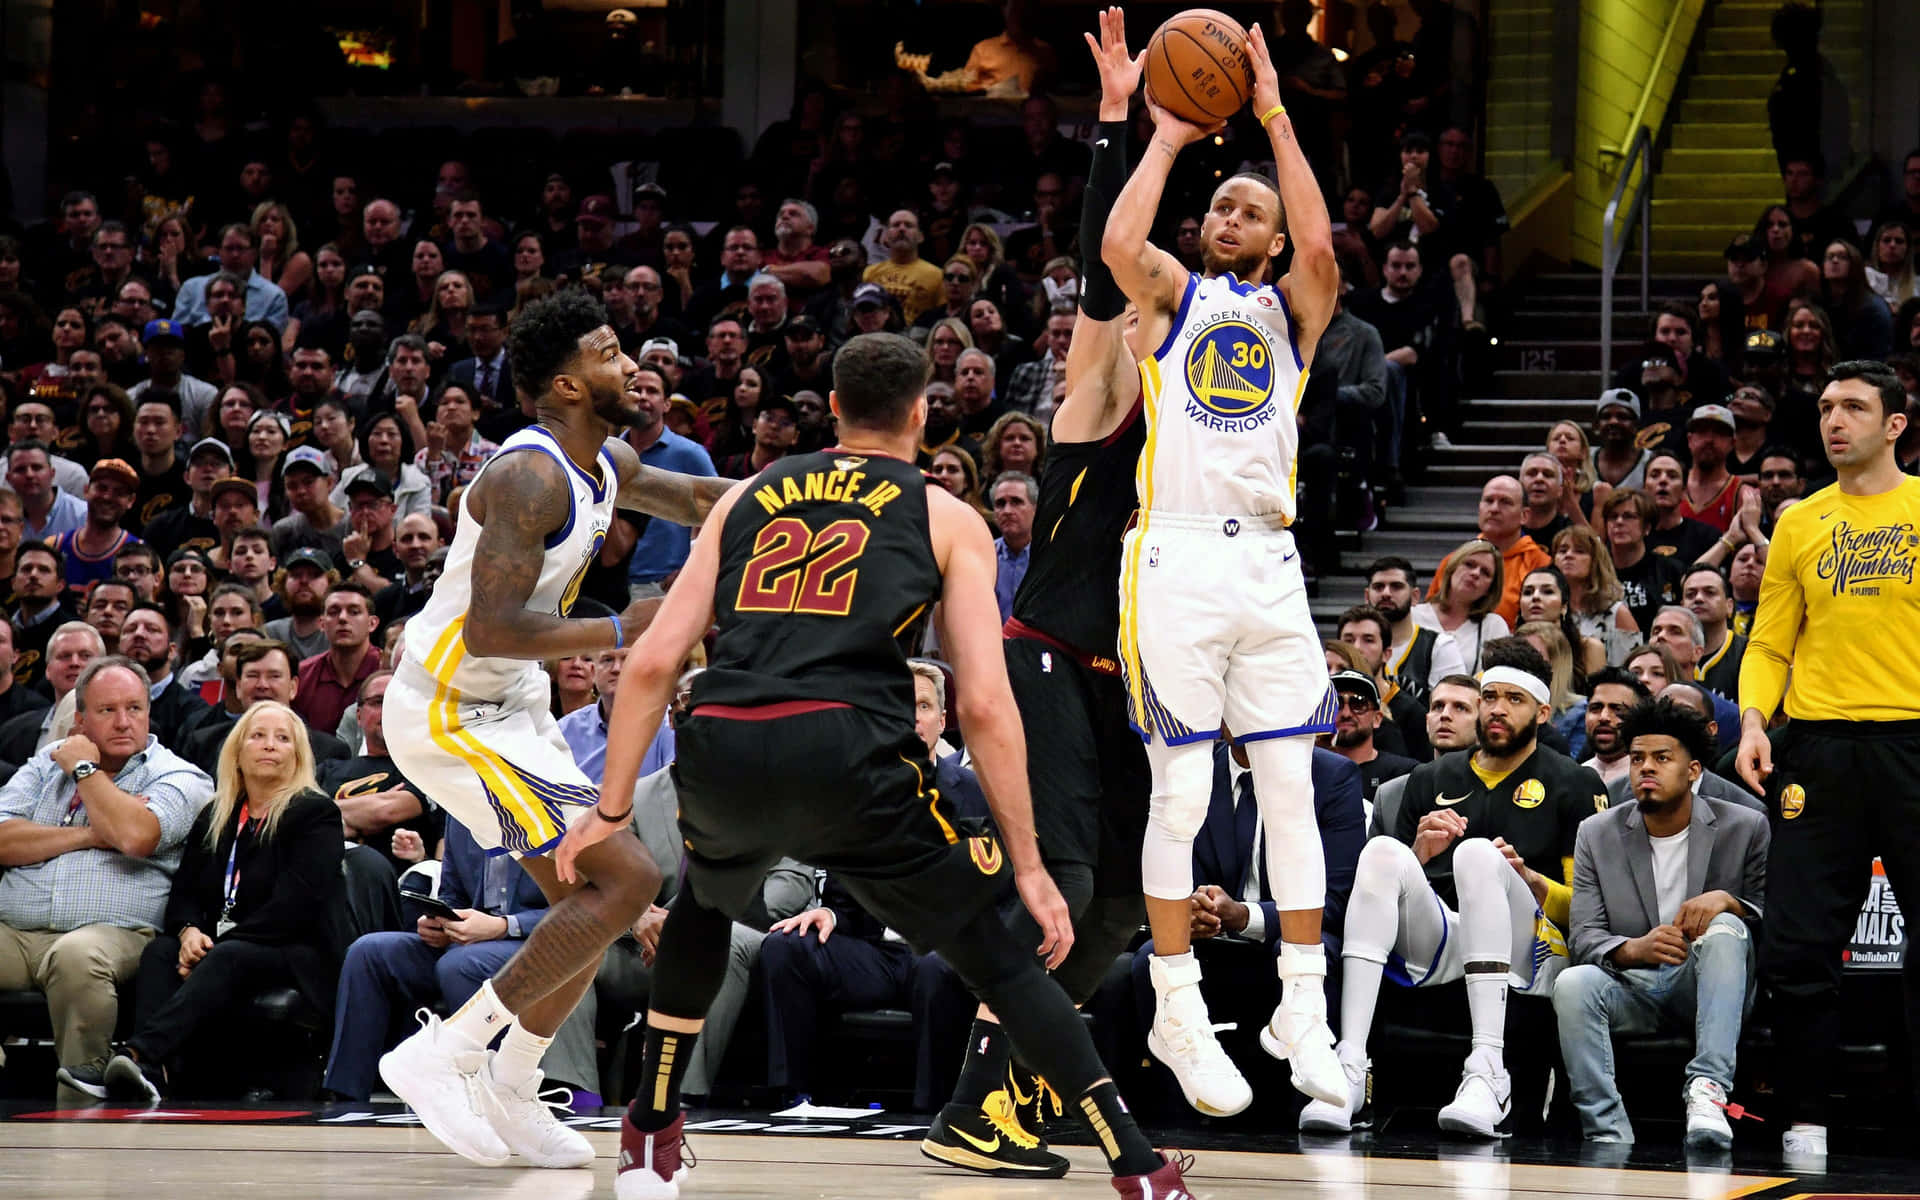 Three-time NBA Champion Steph Curry